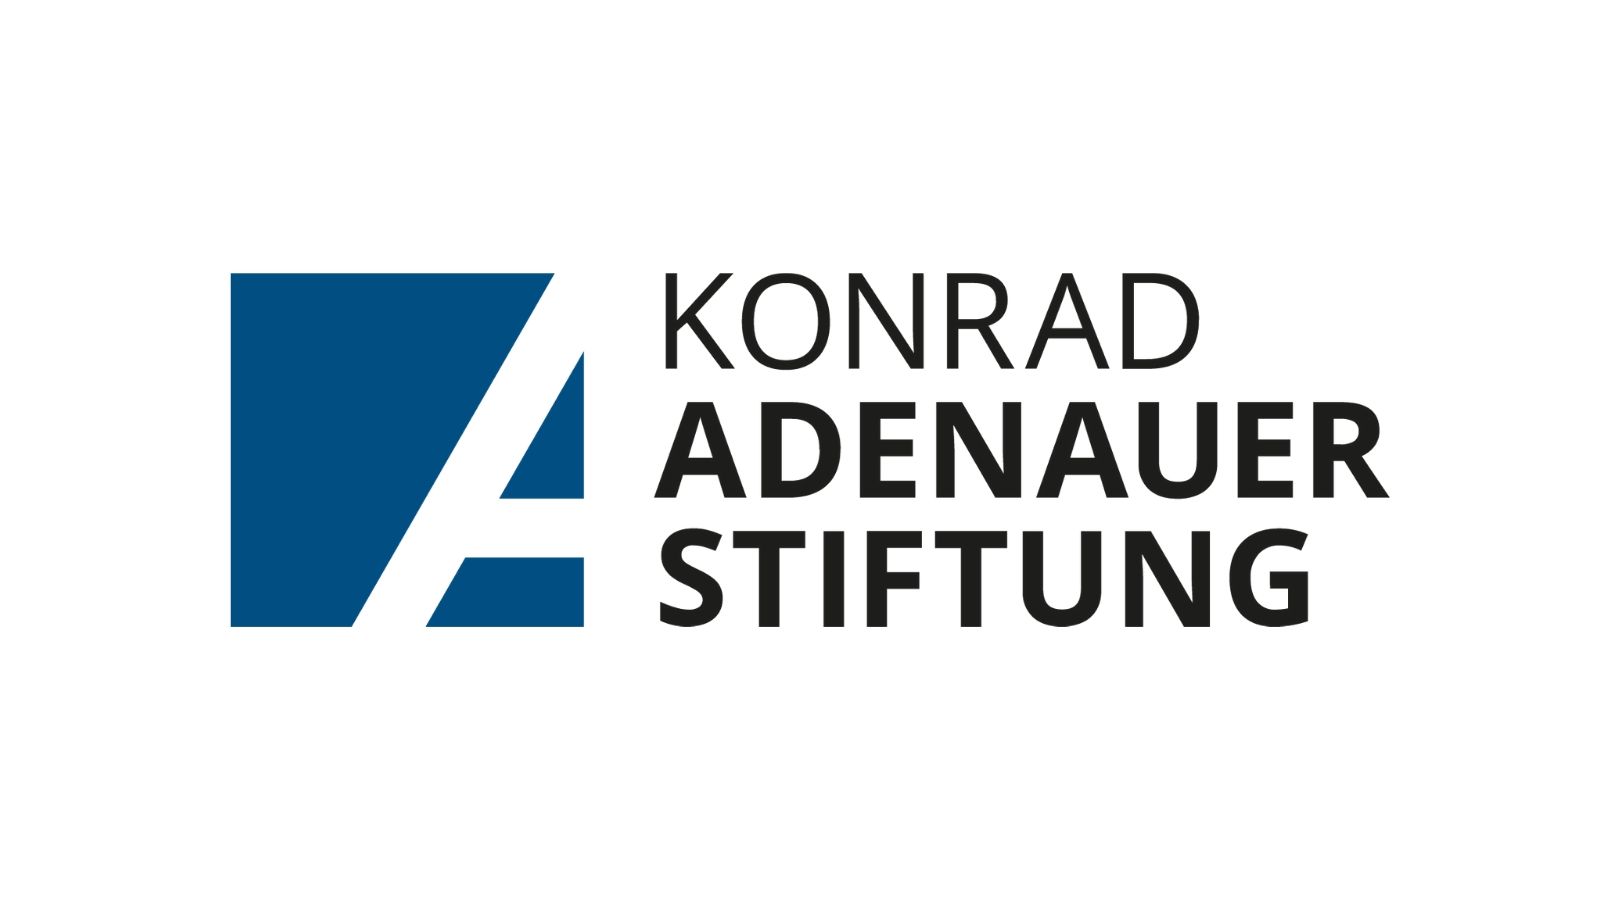 Konrad-Adenauer-Stiftung Scholarship Program